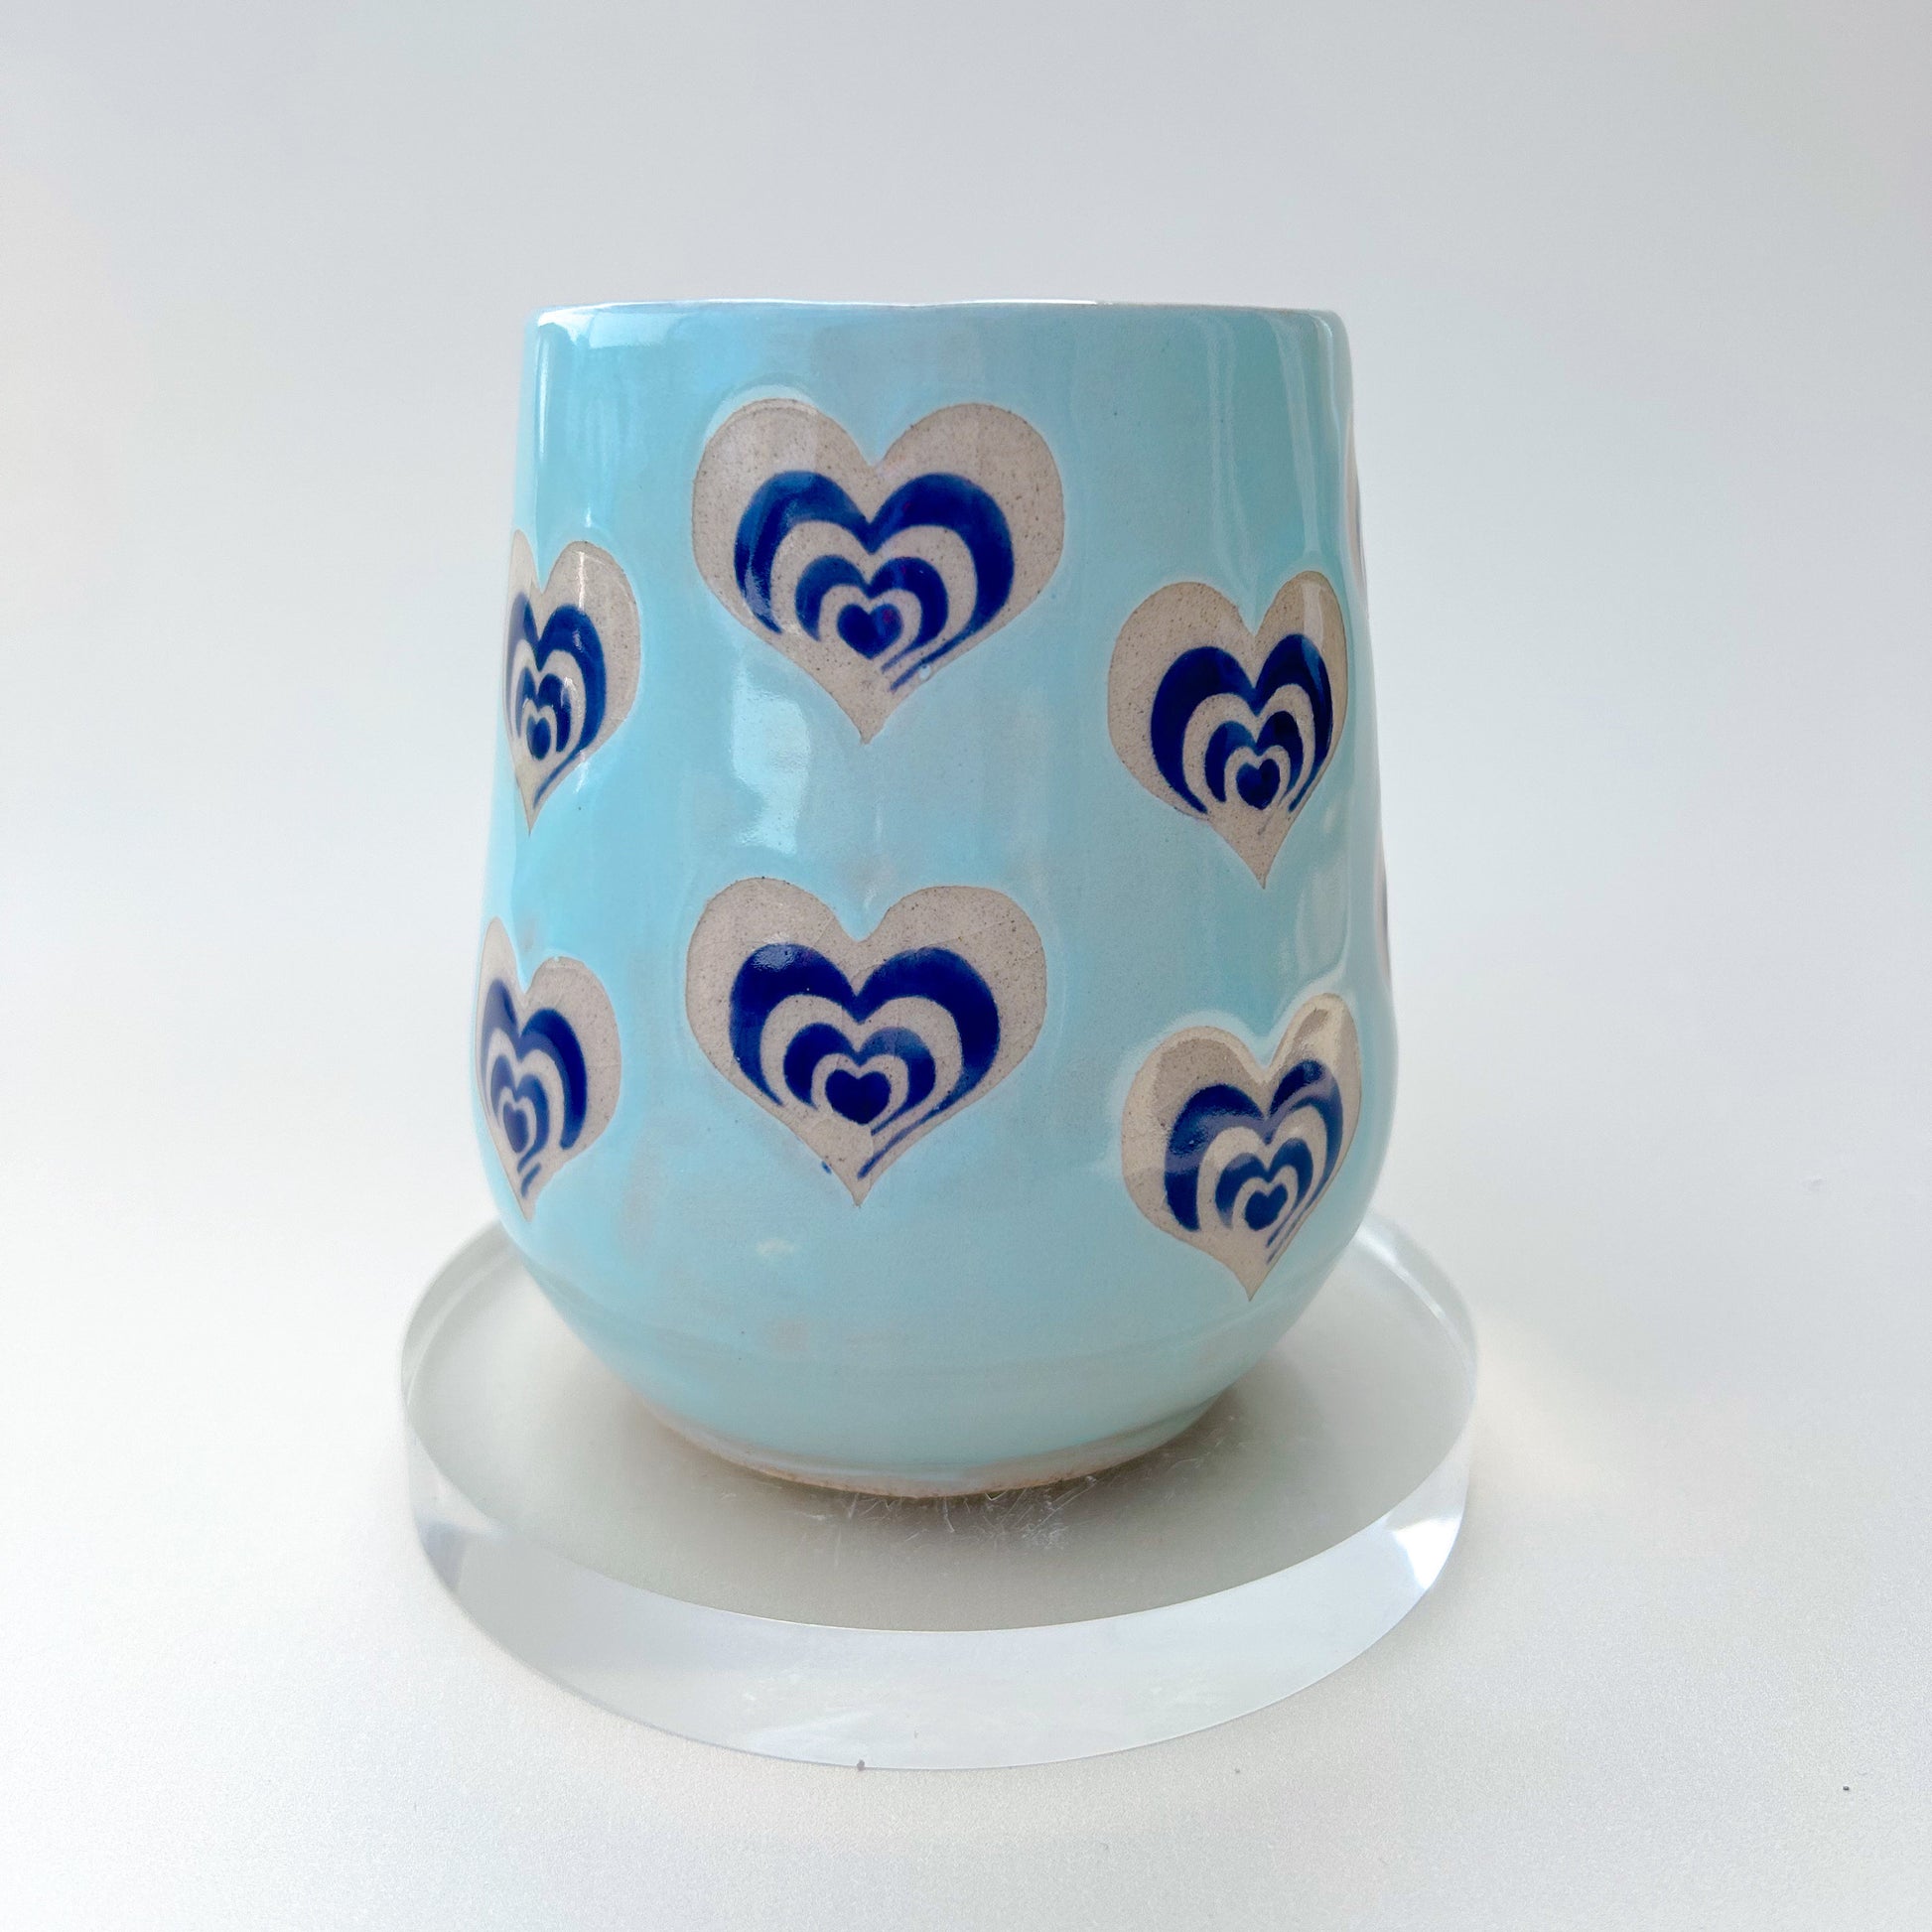 Light Blue Heart Mug Pottery, Heart Coffee Mug Ceramic, Groovy Gift Women, Heart Gift For Friend, Cute Mug Handmade, Retro Heart Cup